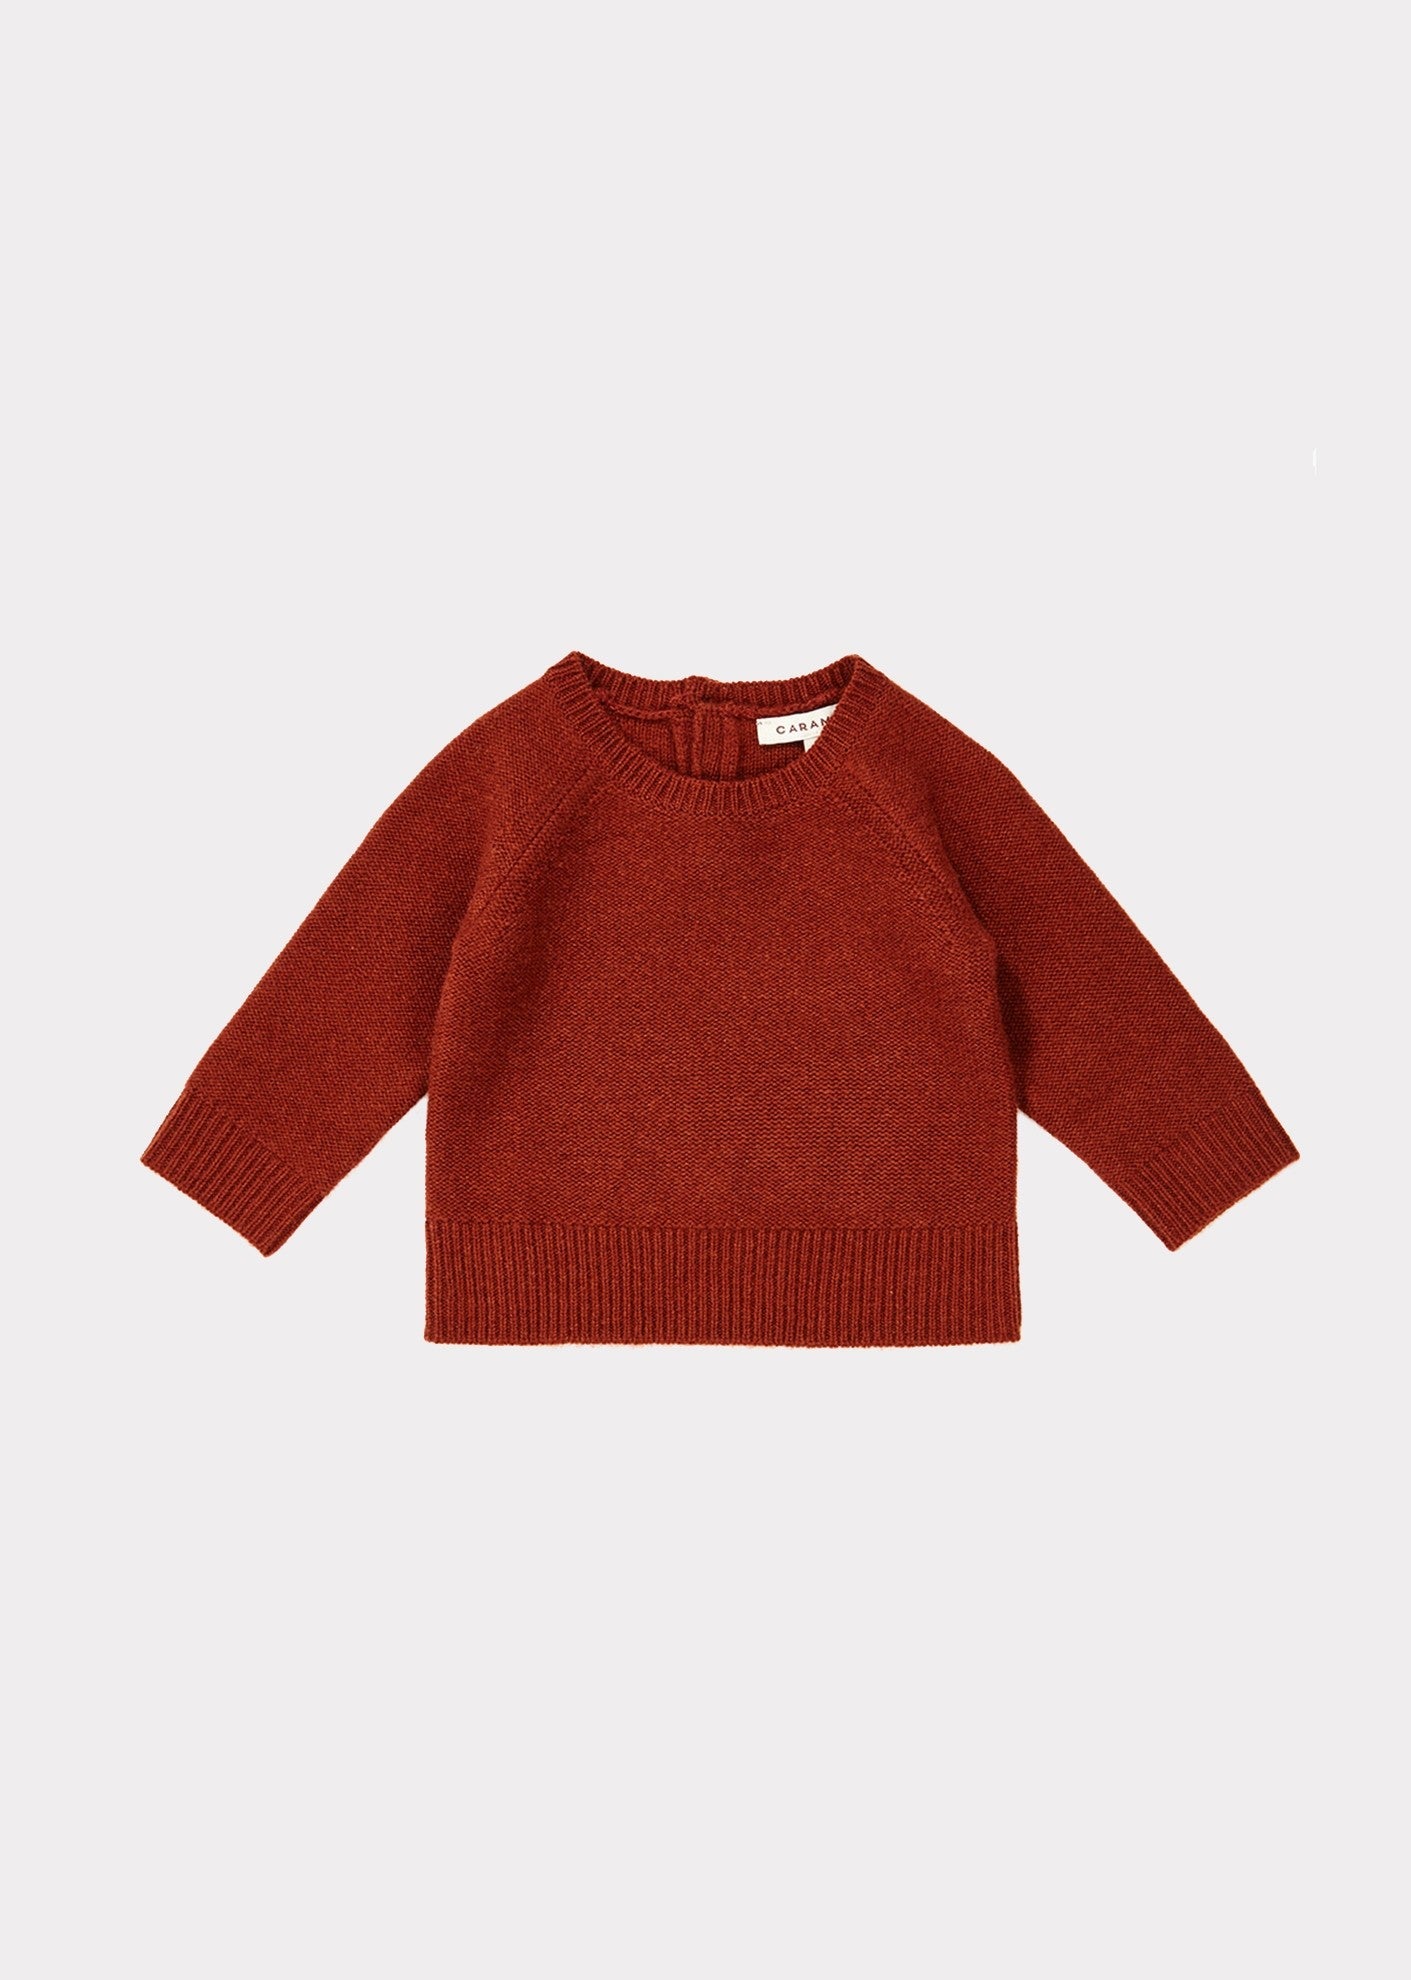 Baby Girls Rust Cashmere Sweater